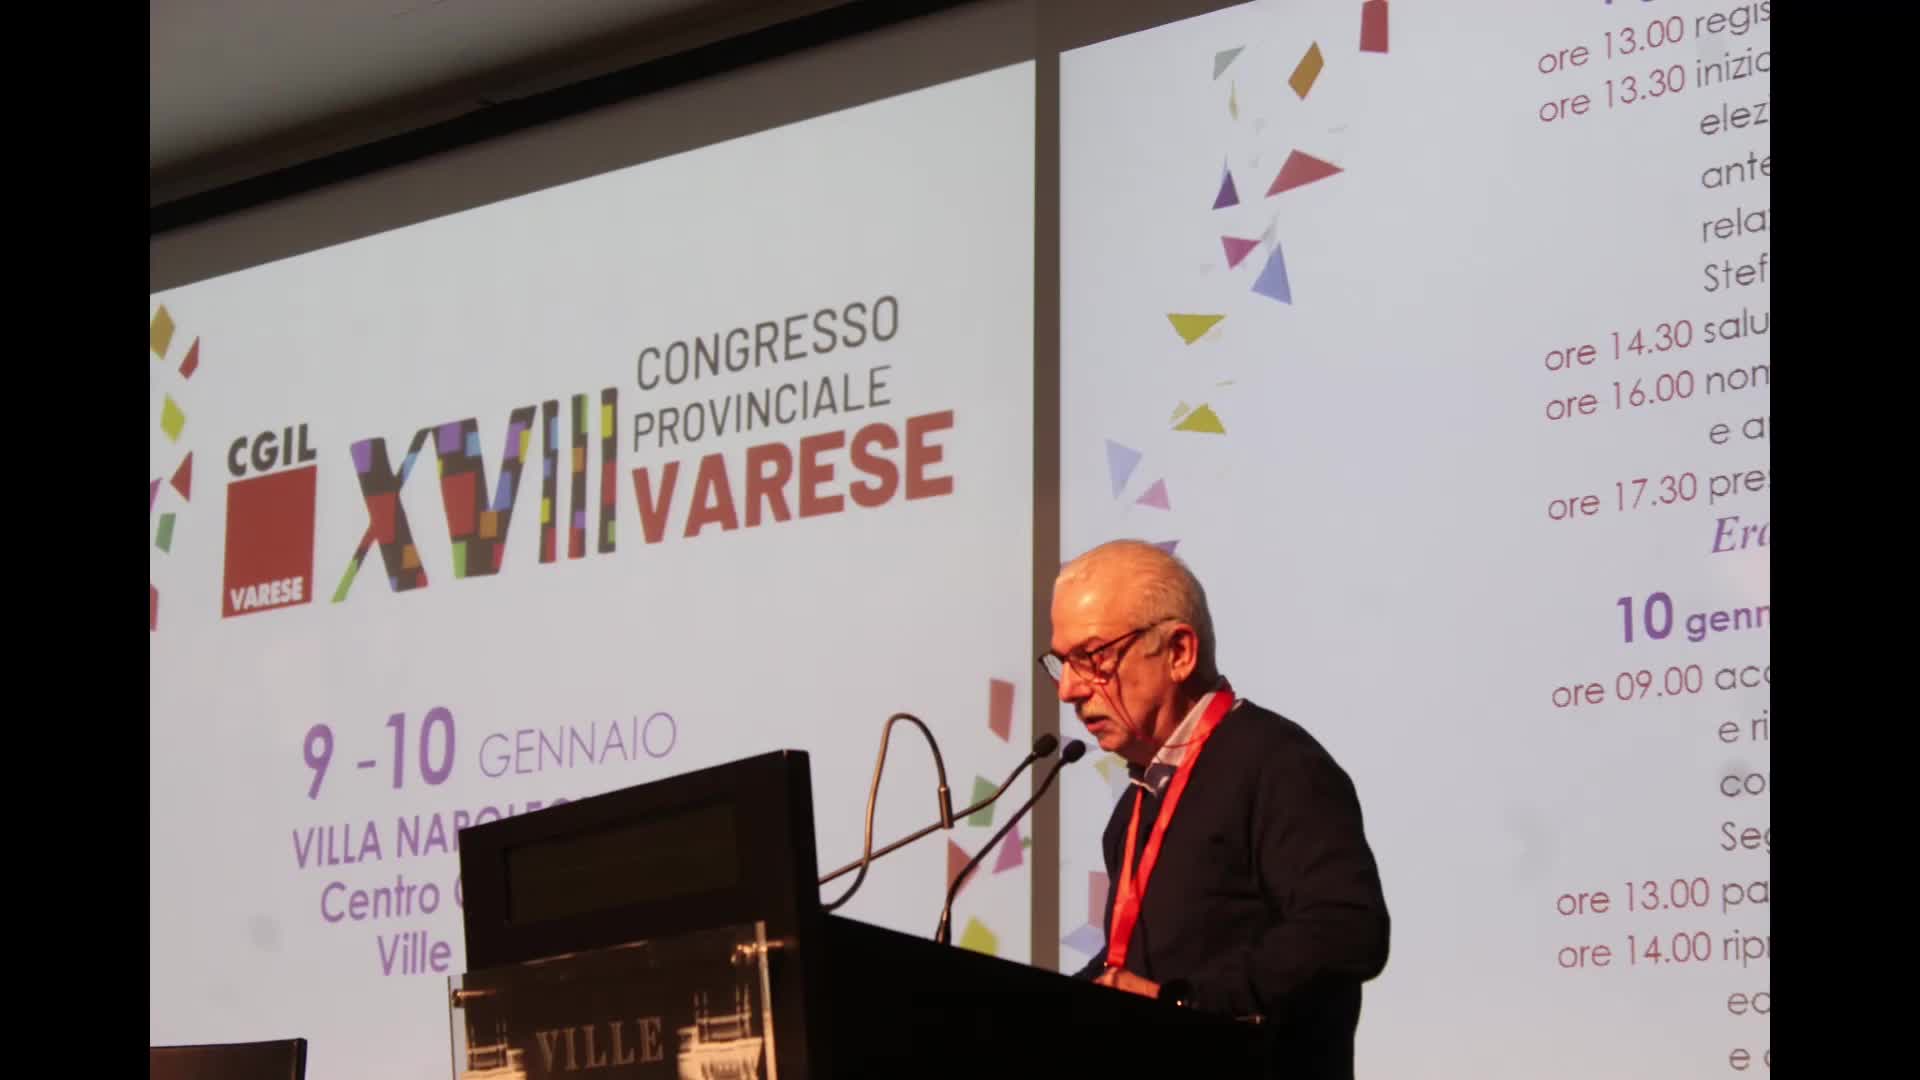 Congresso di Varese